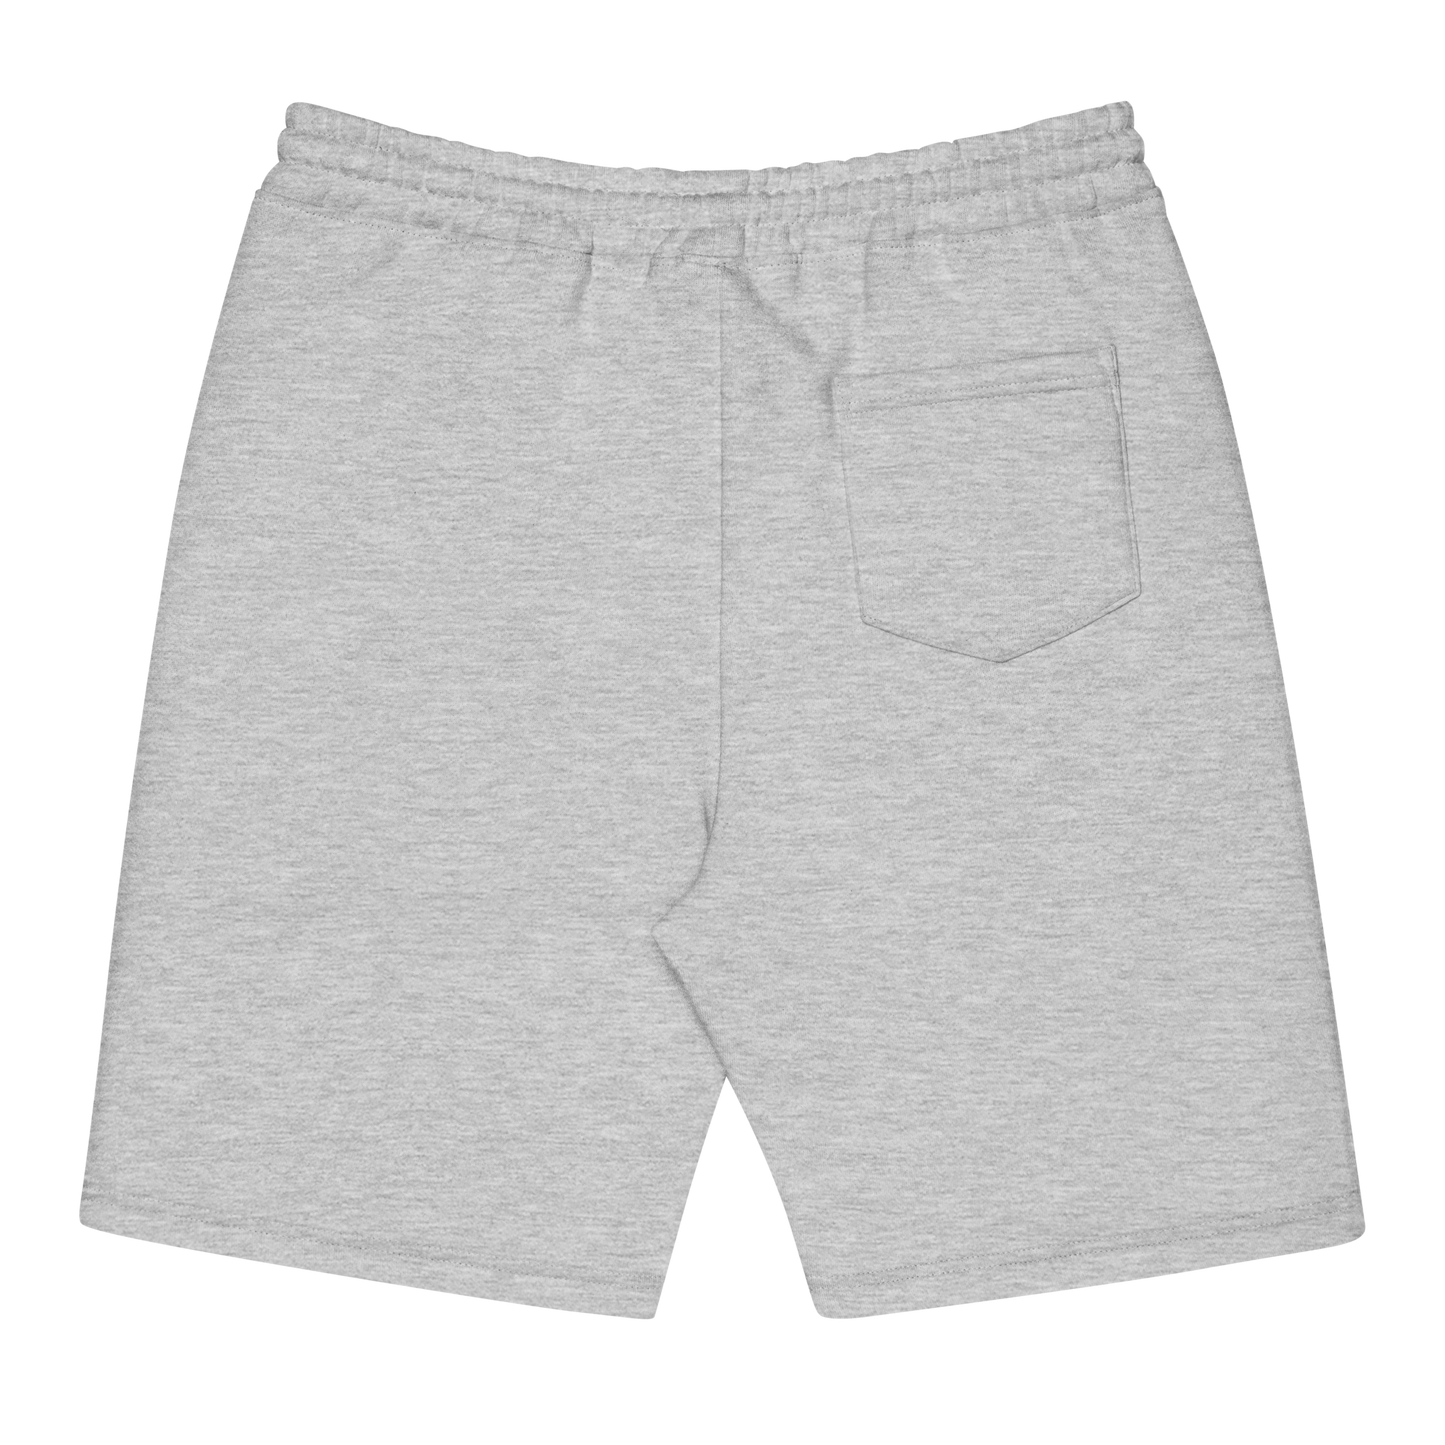 Men's fleece shorts